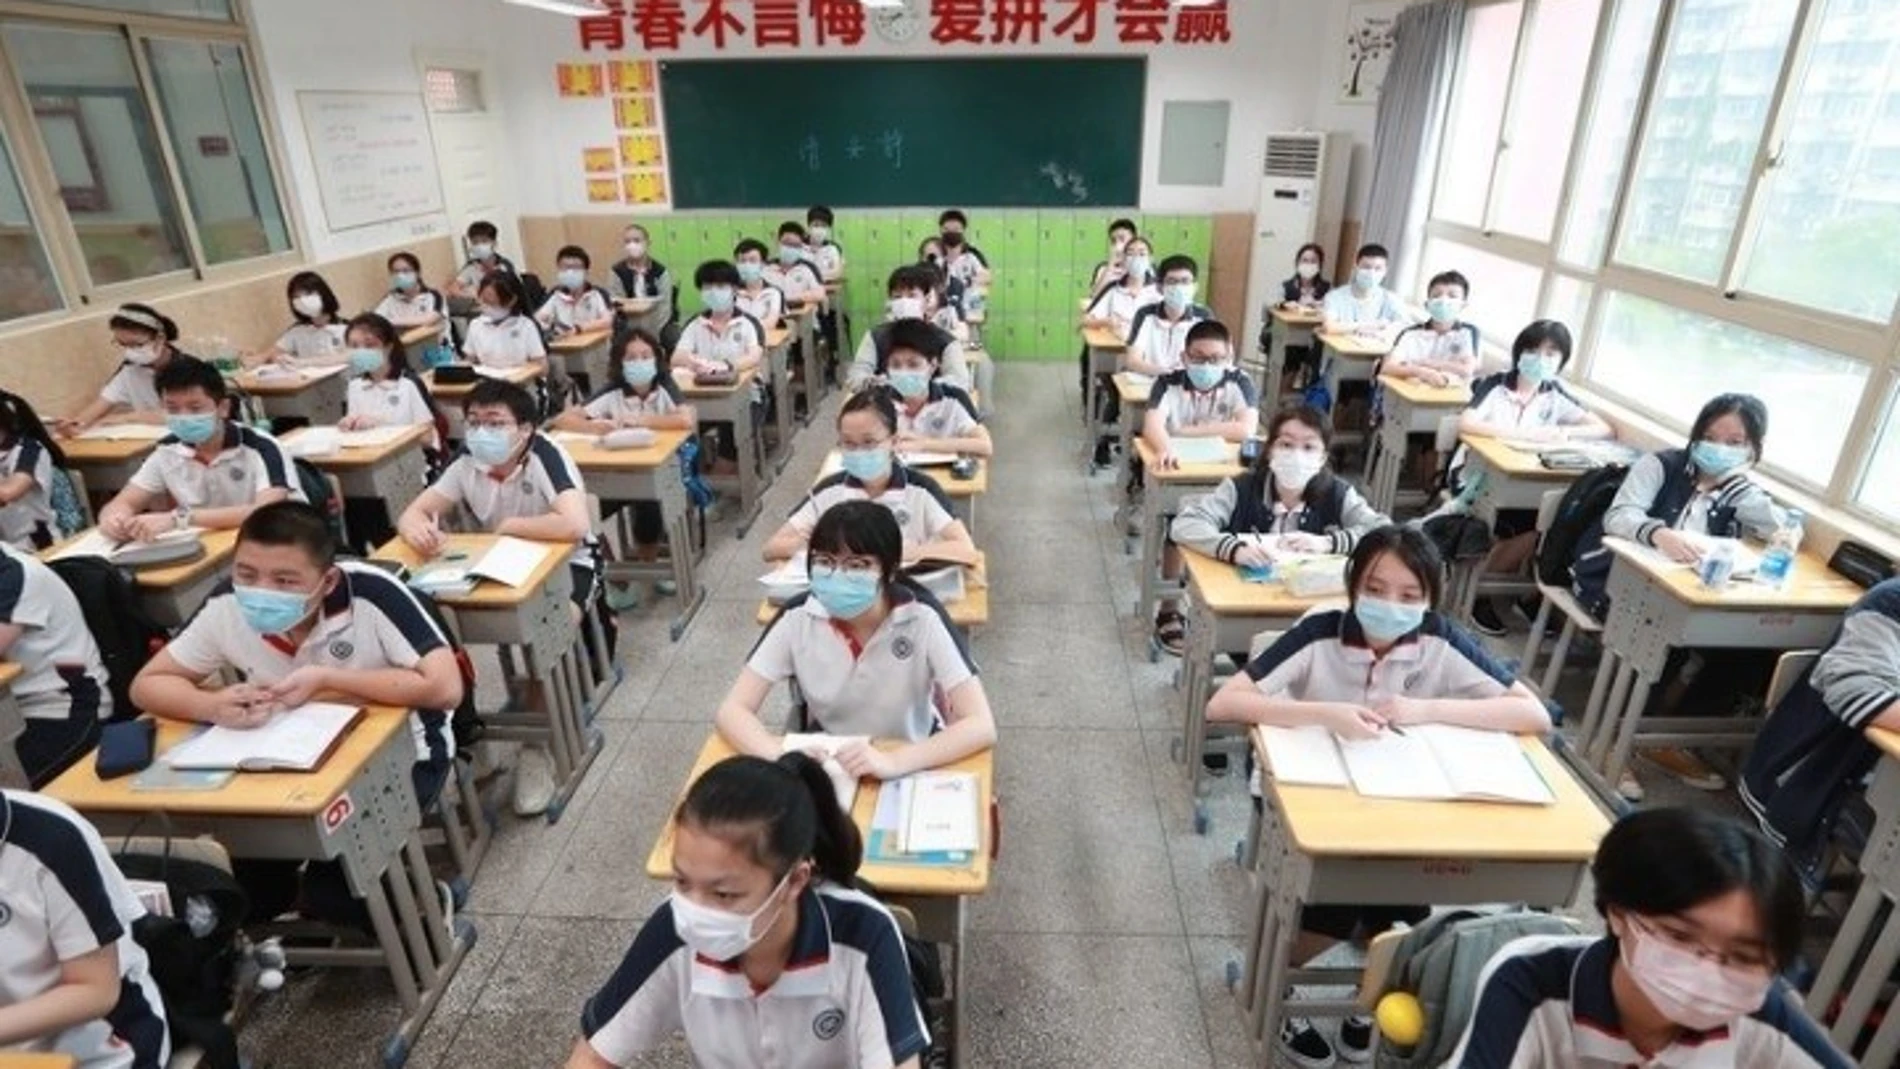 Coronavirus.- Wuhan, origen de la pandemia, retomará las clases este martes sin mascarilla obligatoria